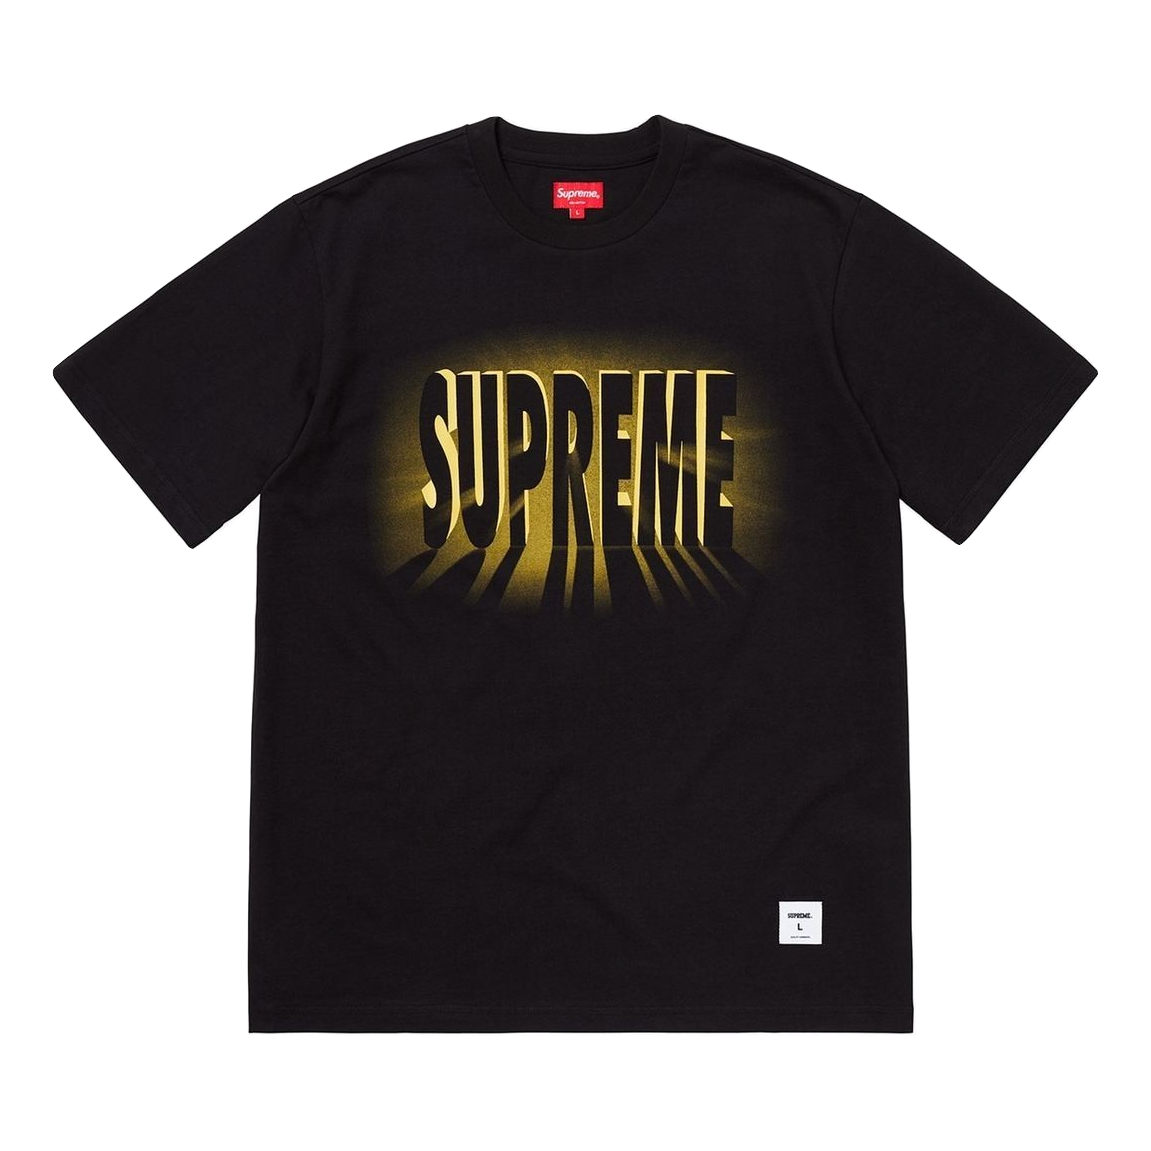 Supreme Light S/S Top - Black - Used